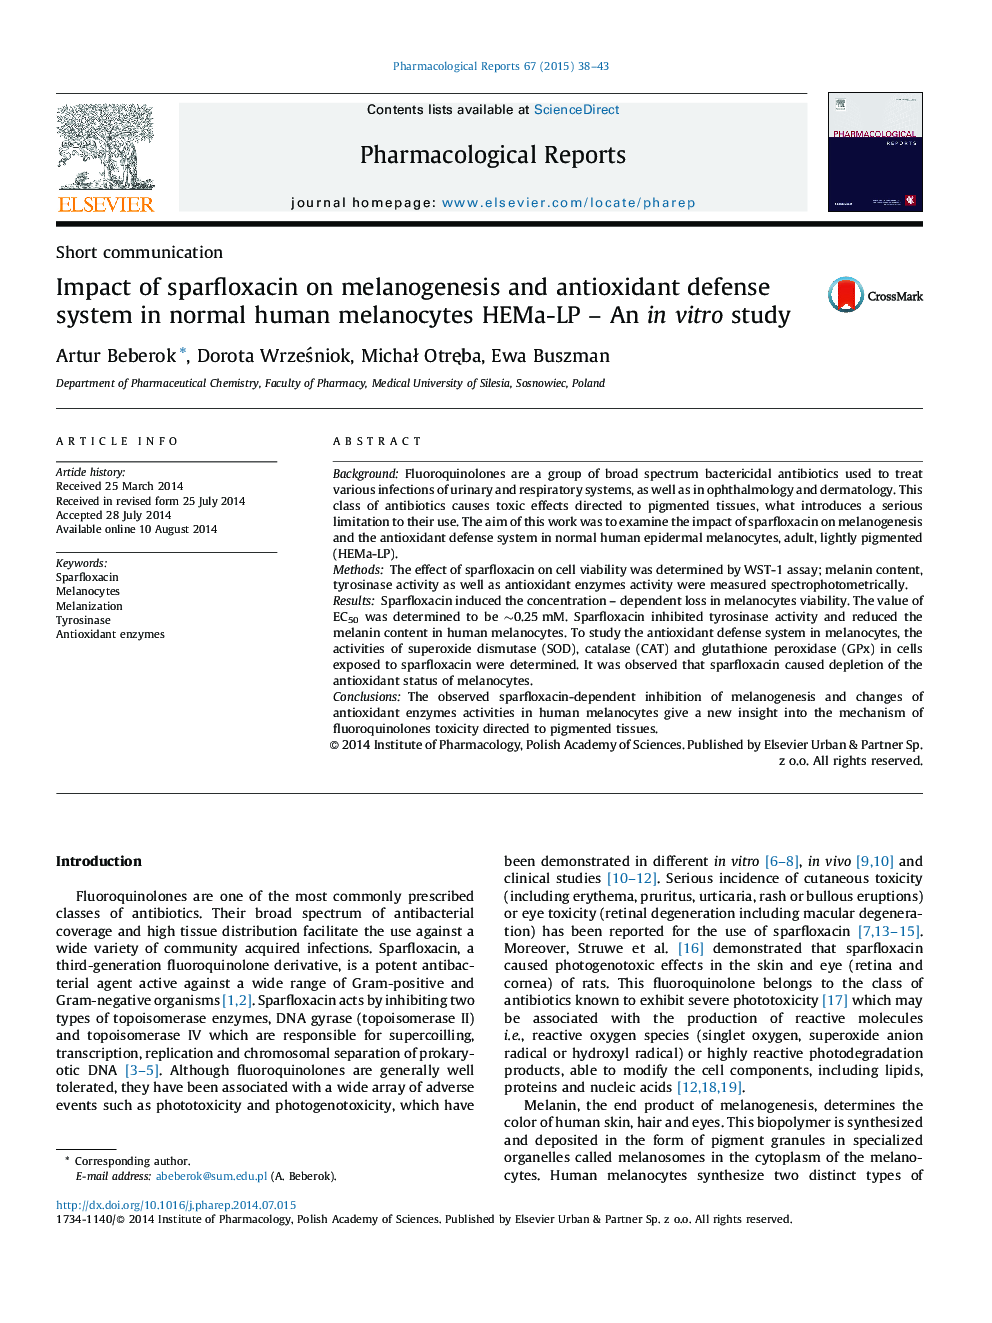 Impact of sparfloxacin on melanogenesis and antioxidant defense system in normal human melanocytes HEMa-LP – An in vitro study